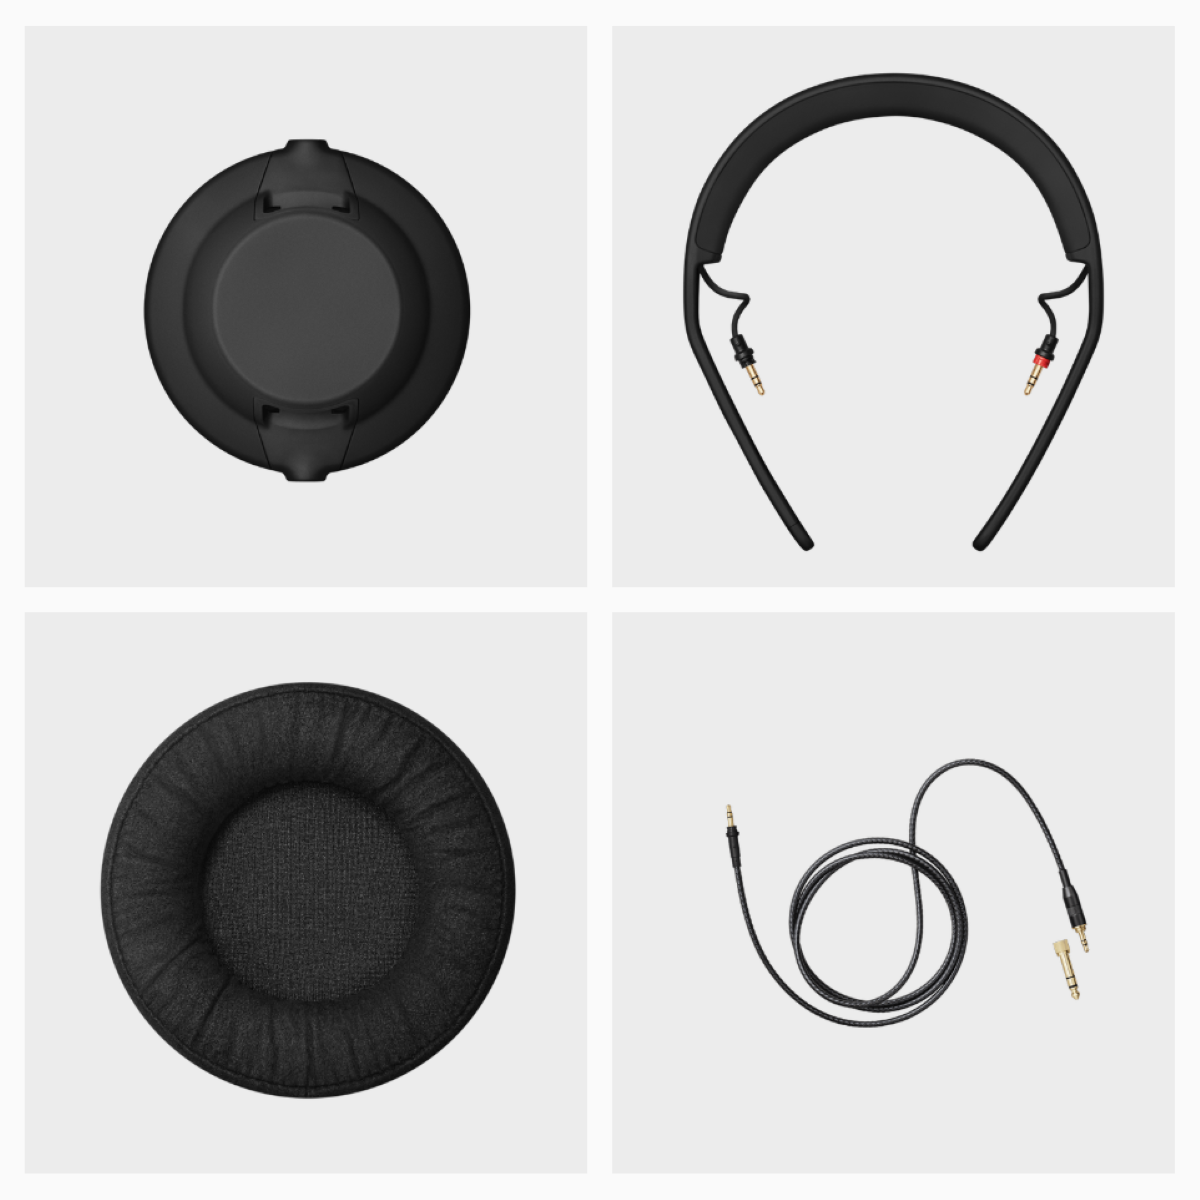 TMA-2 HD wireless bluetooth earphones - Box Contents